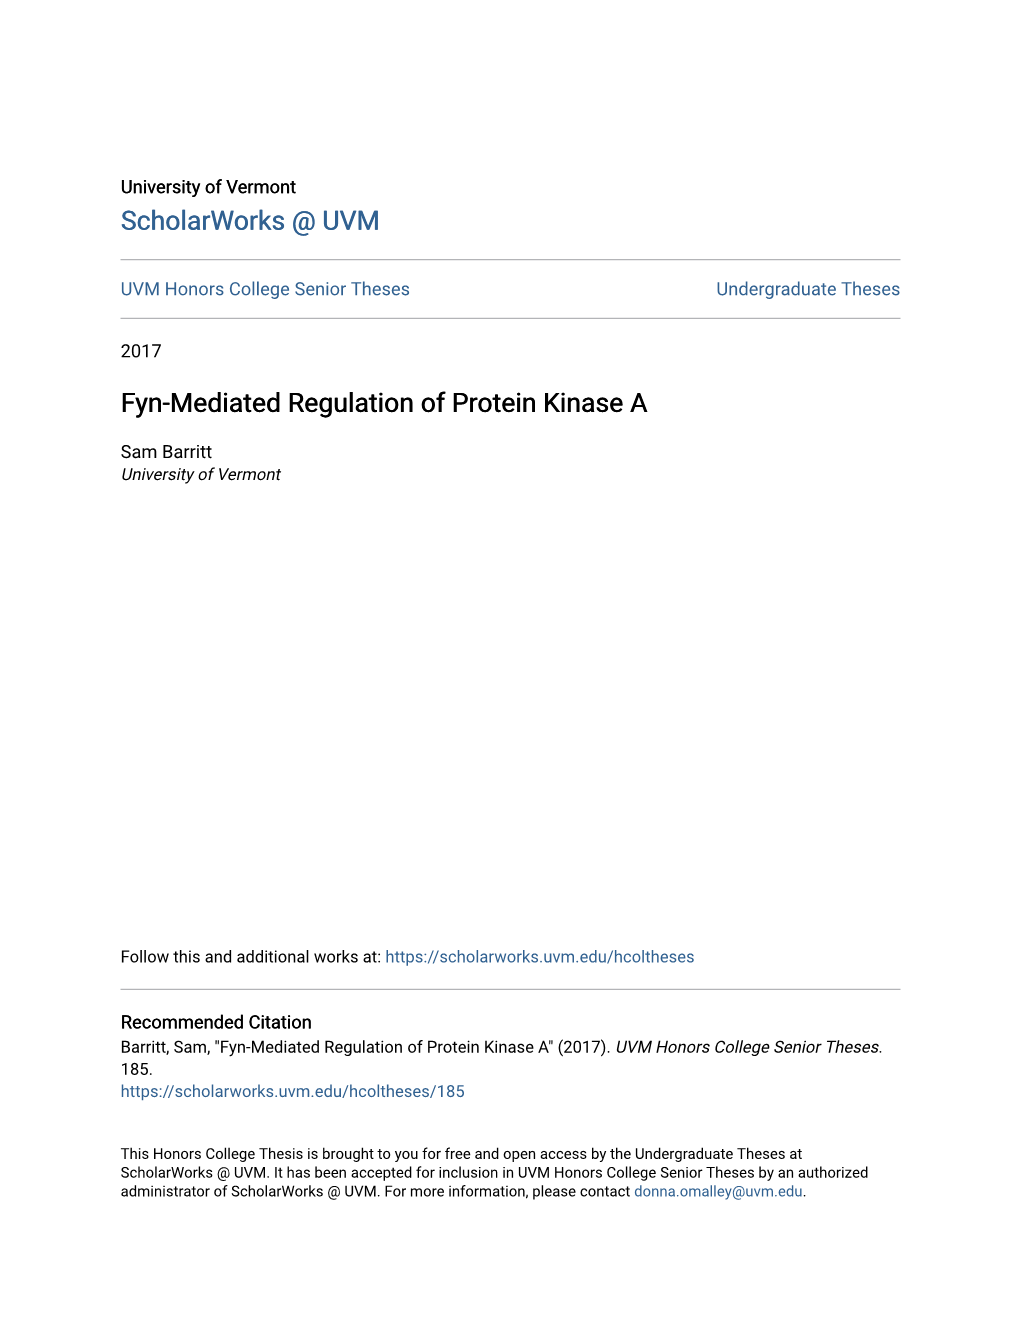 Fyn-Mediated Regulation of Protein Kinase A